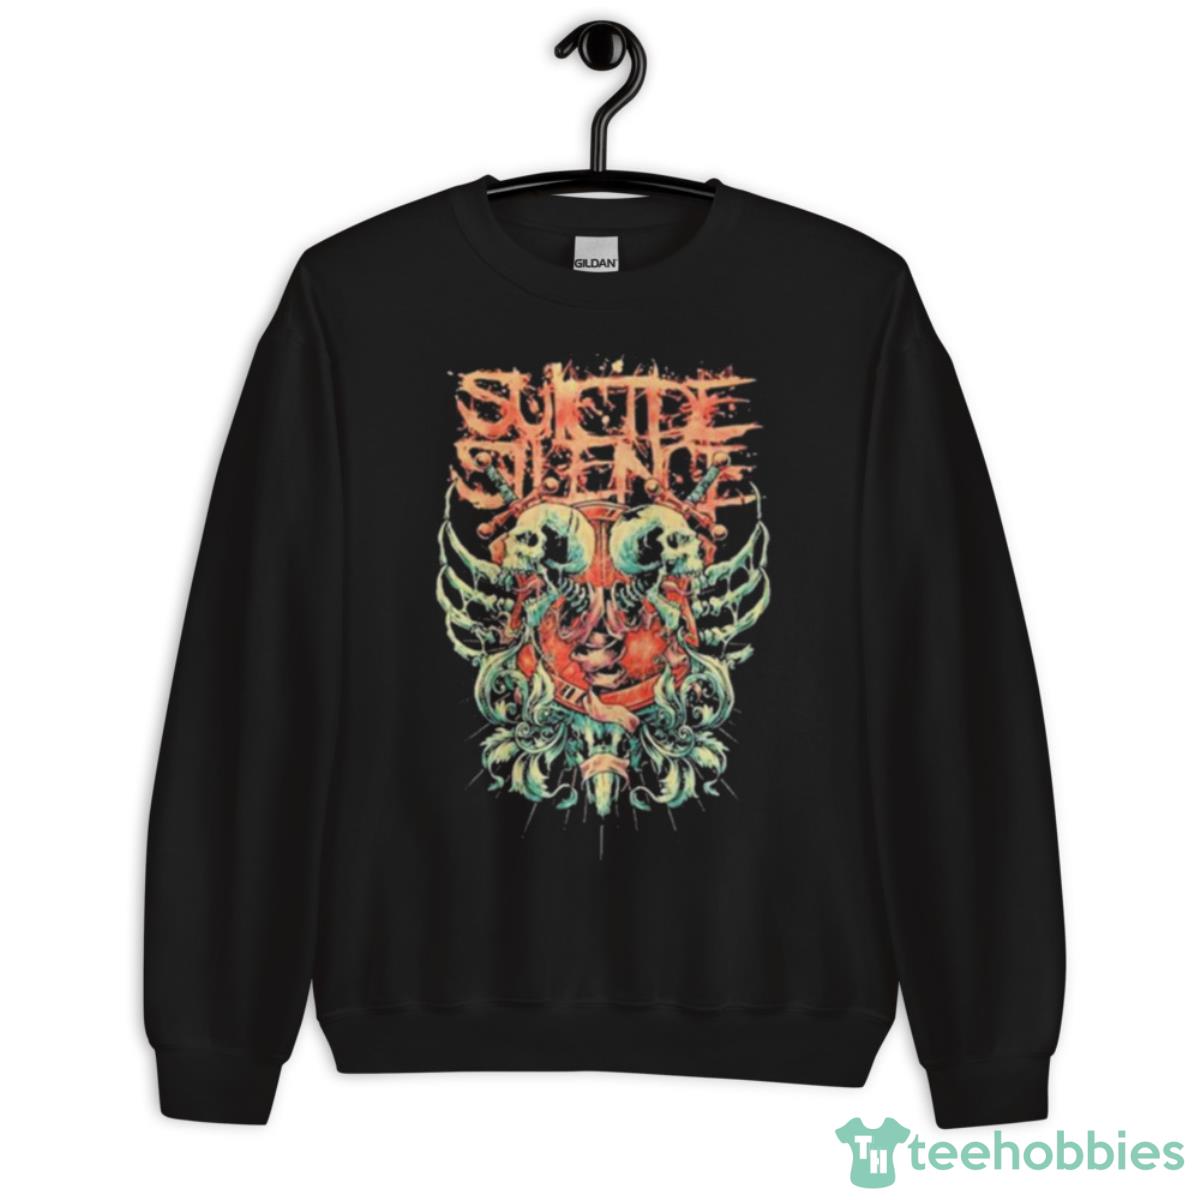 Skulls Suicide Silence Shirt - Unisex Crewneck Sweatshirt